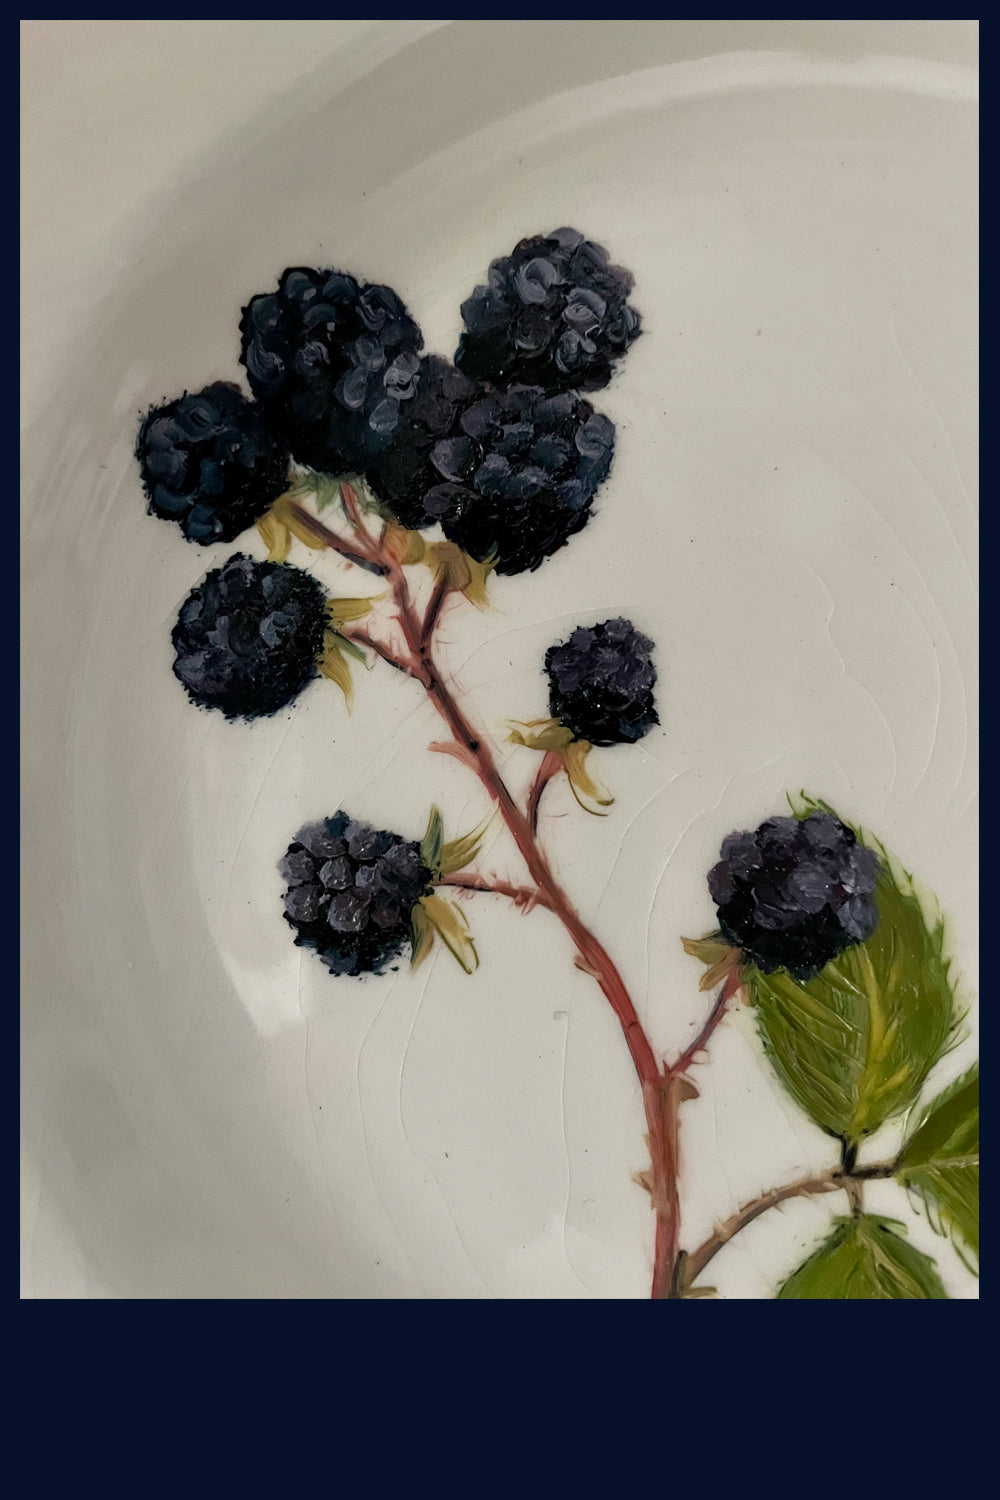 SOLD - Plated: original fine art oil painting on a vintage plate - Blackberries